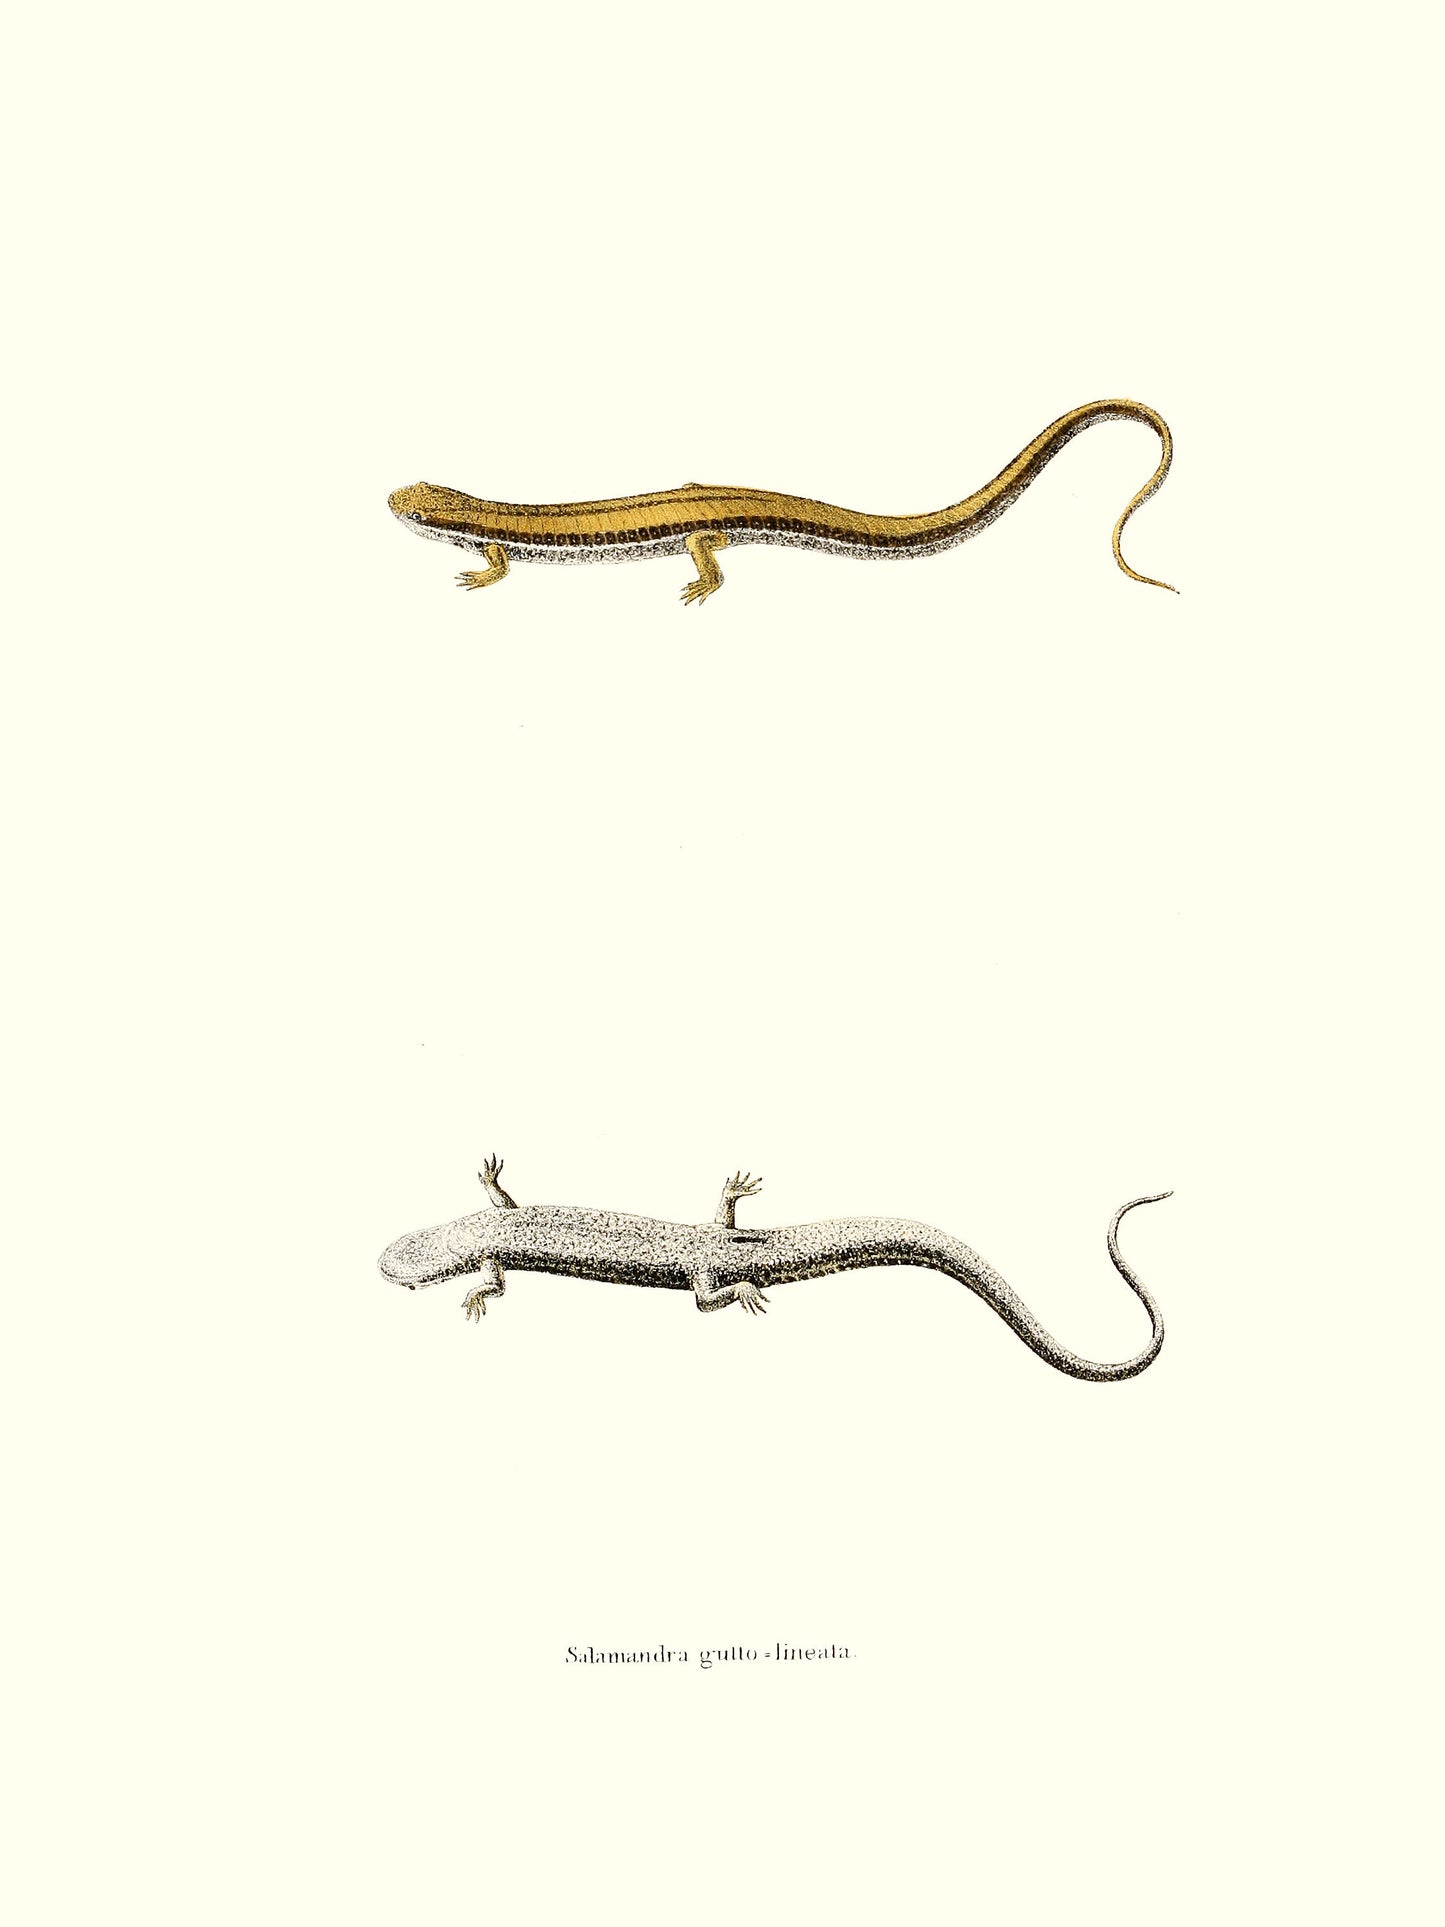 North American Herpetology Set 2 Salamanders [34 Images]